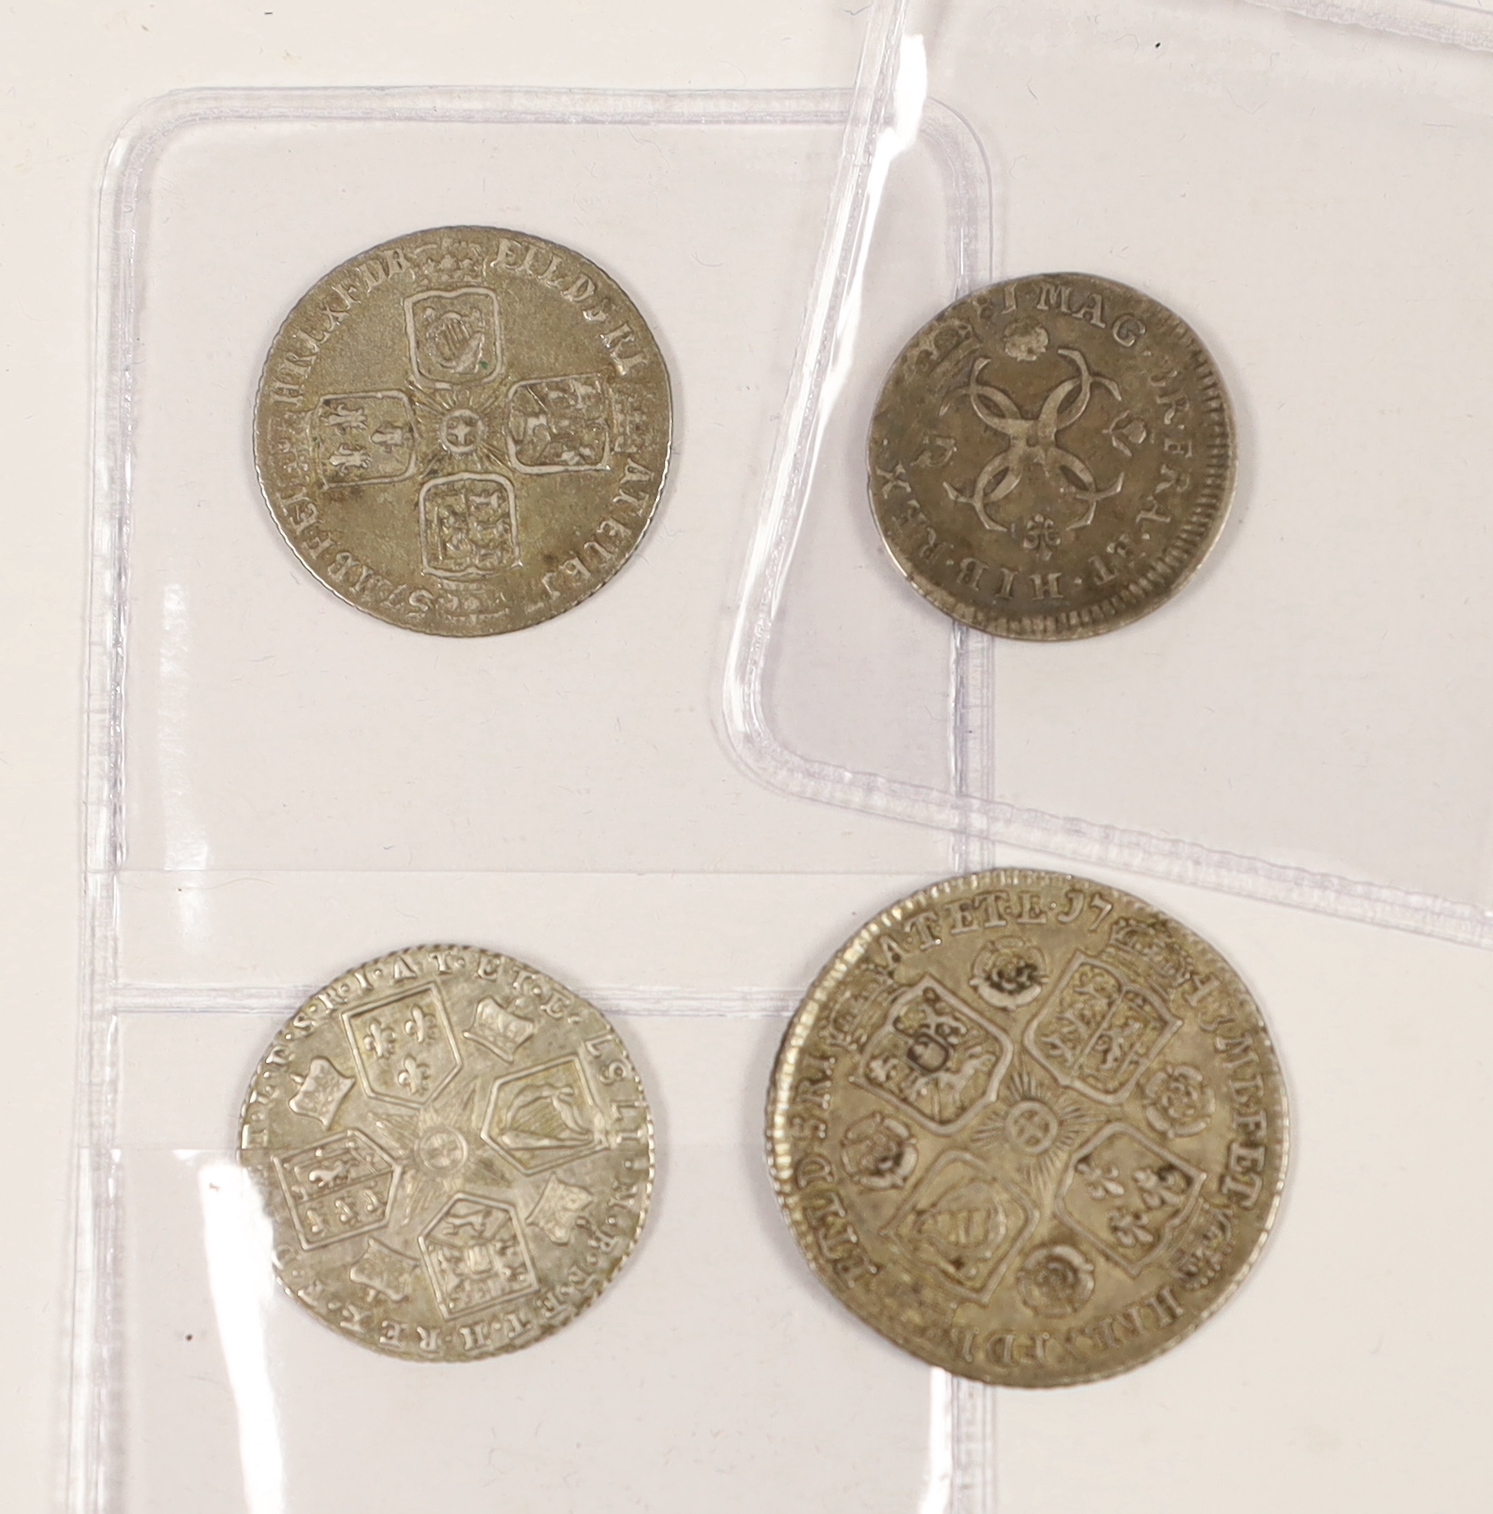 British silver coins - Charles II 4d, 1681, a George II shilling, 1743, F, and sixpence 1757, F and a George III sixpence 1787, VF